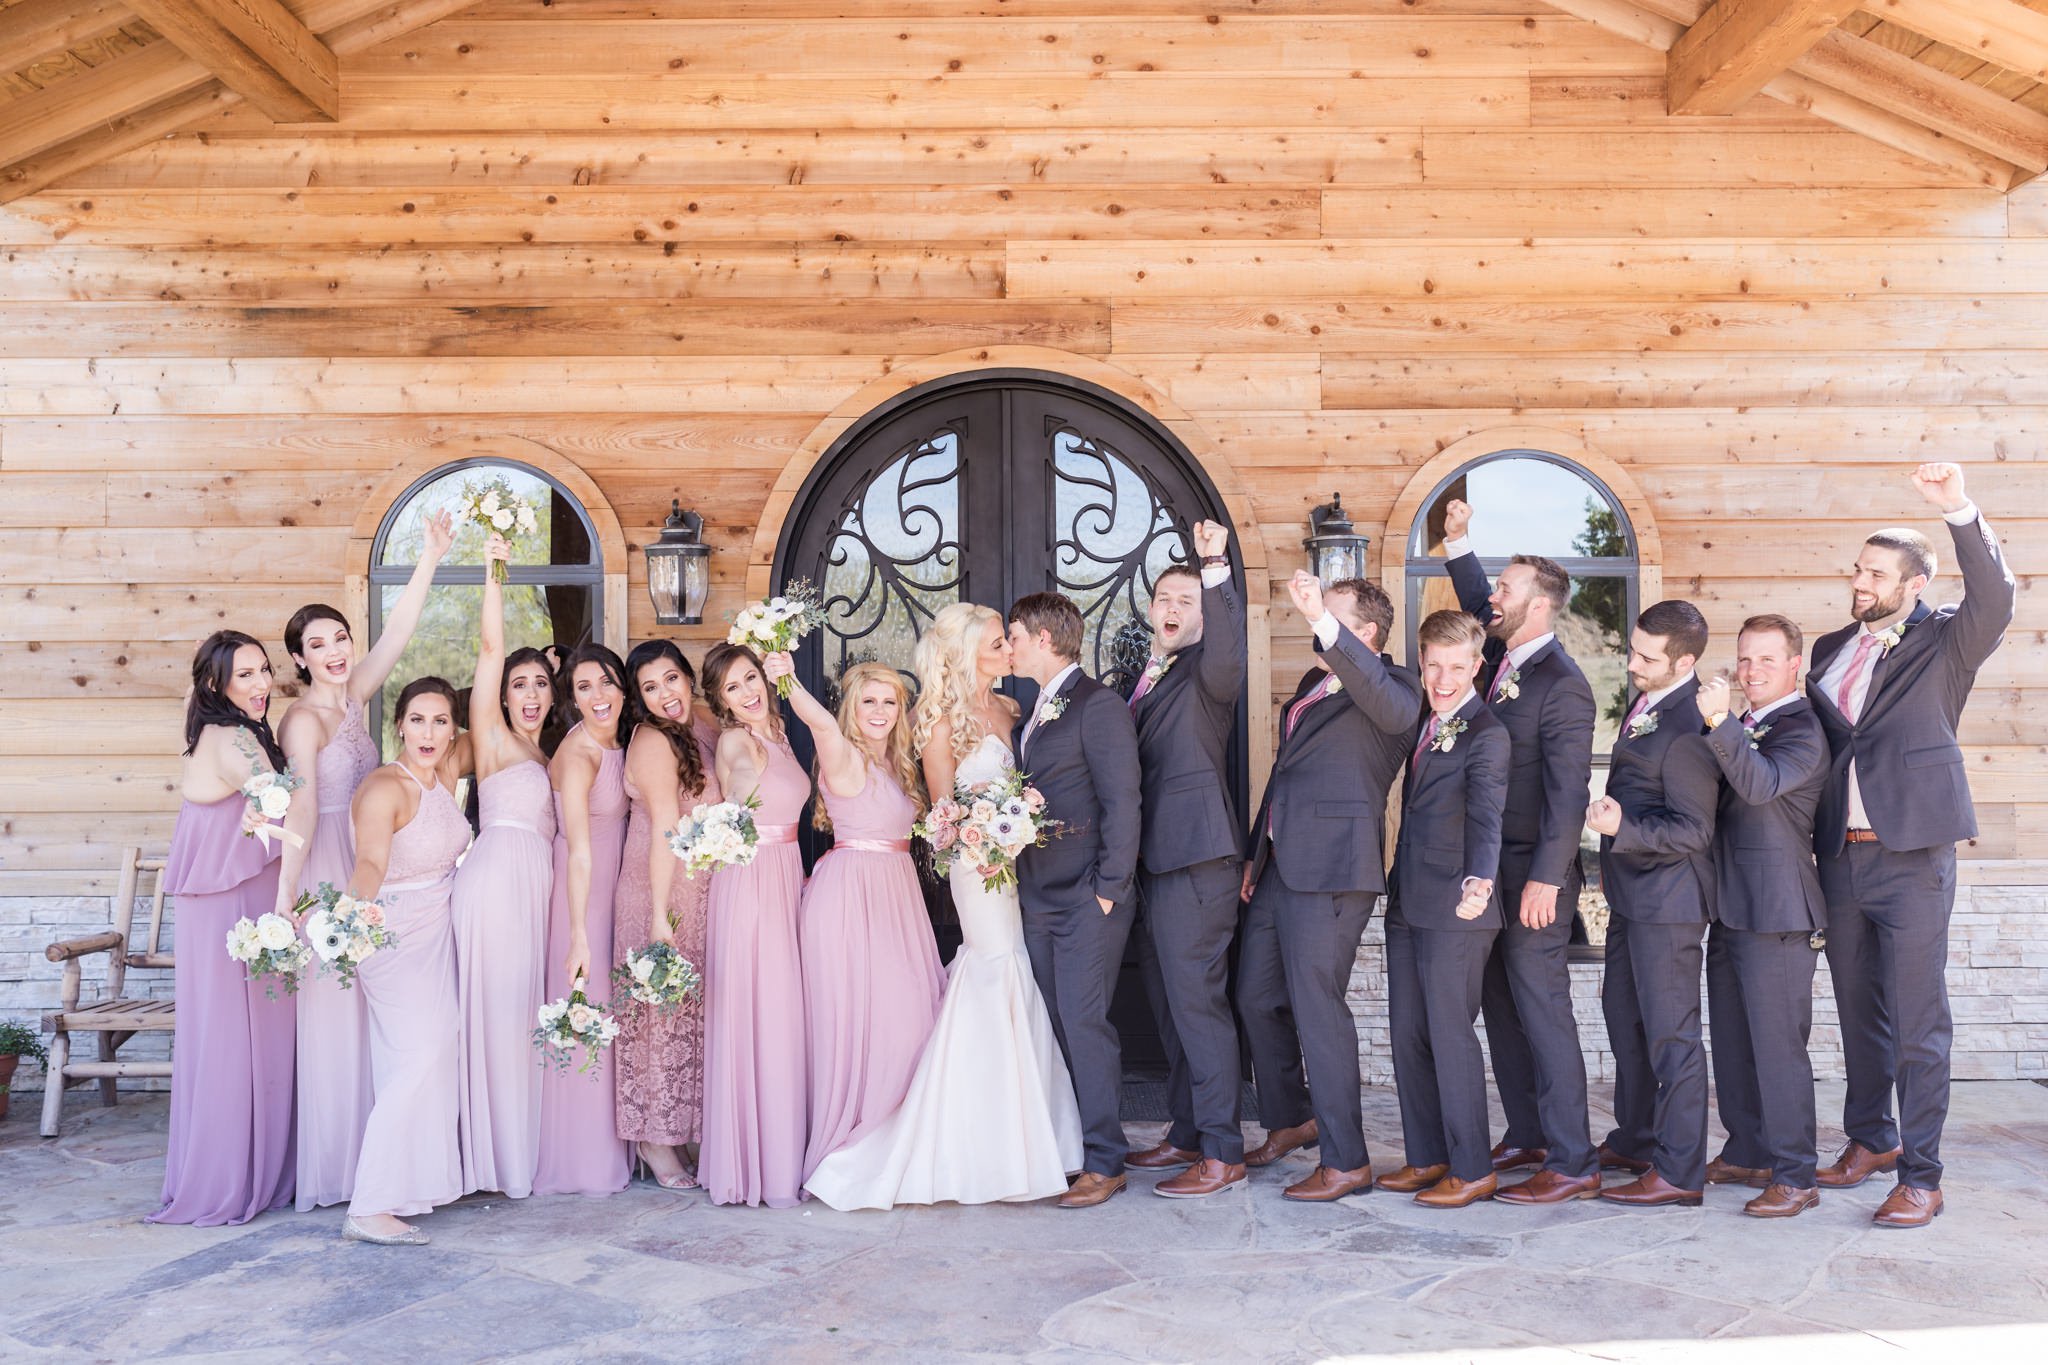 A Dusty Rose and Charcoal Wedding at Geronimo Oaks in Seguin, TX by Dawn Elizabeth Studios, San Antonio Wedding Photographer